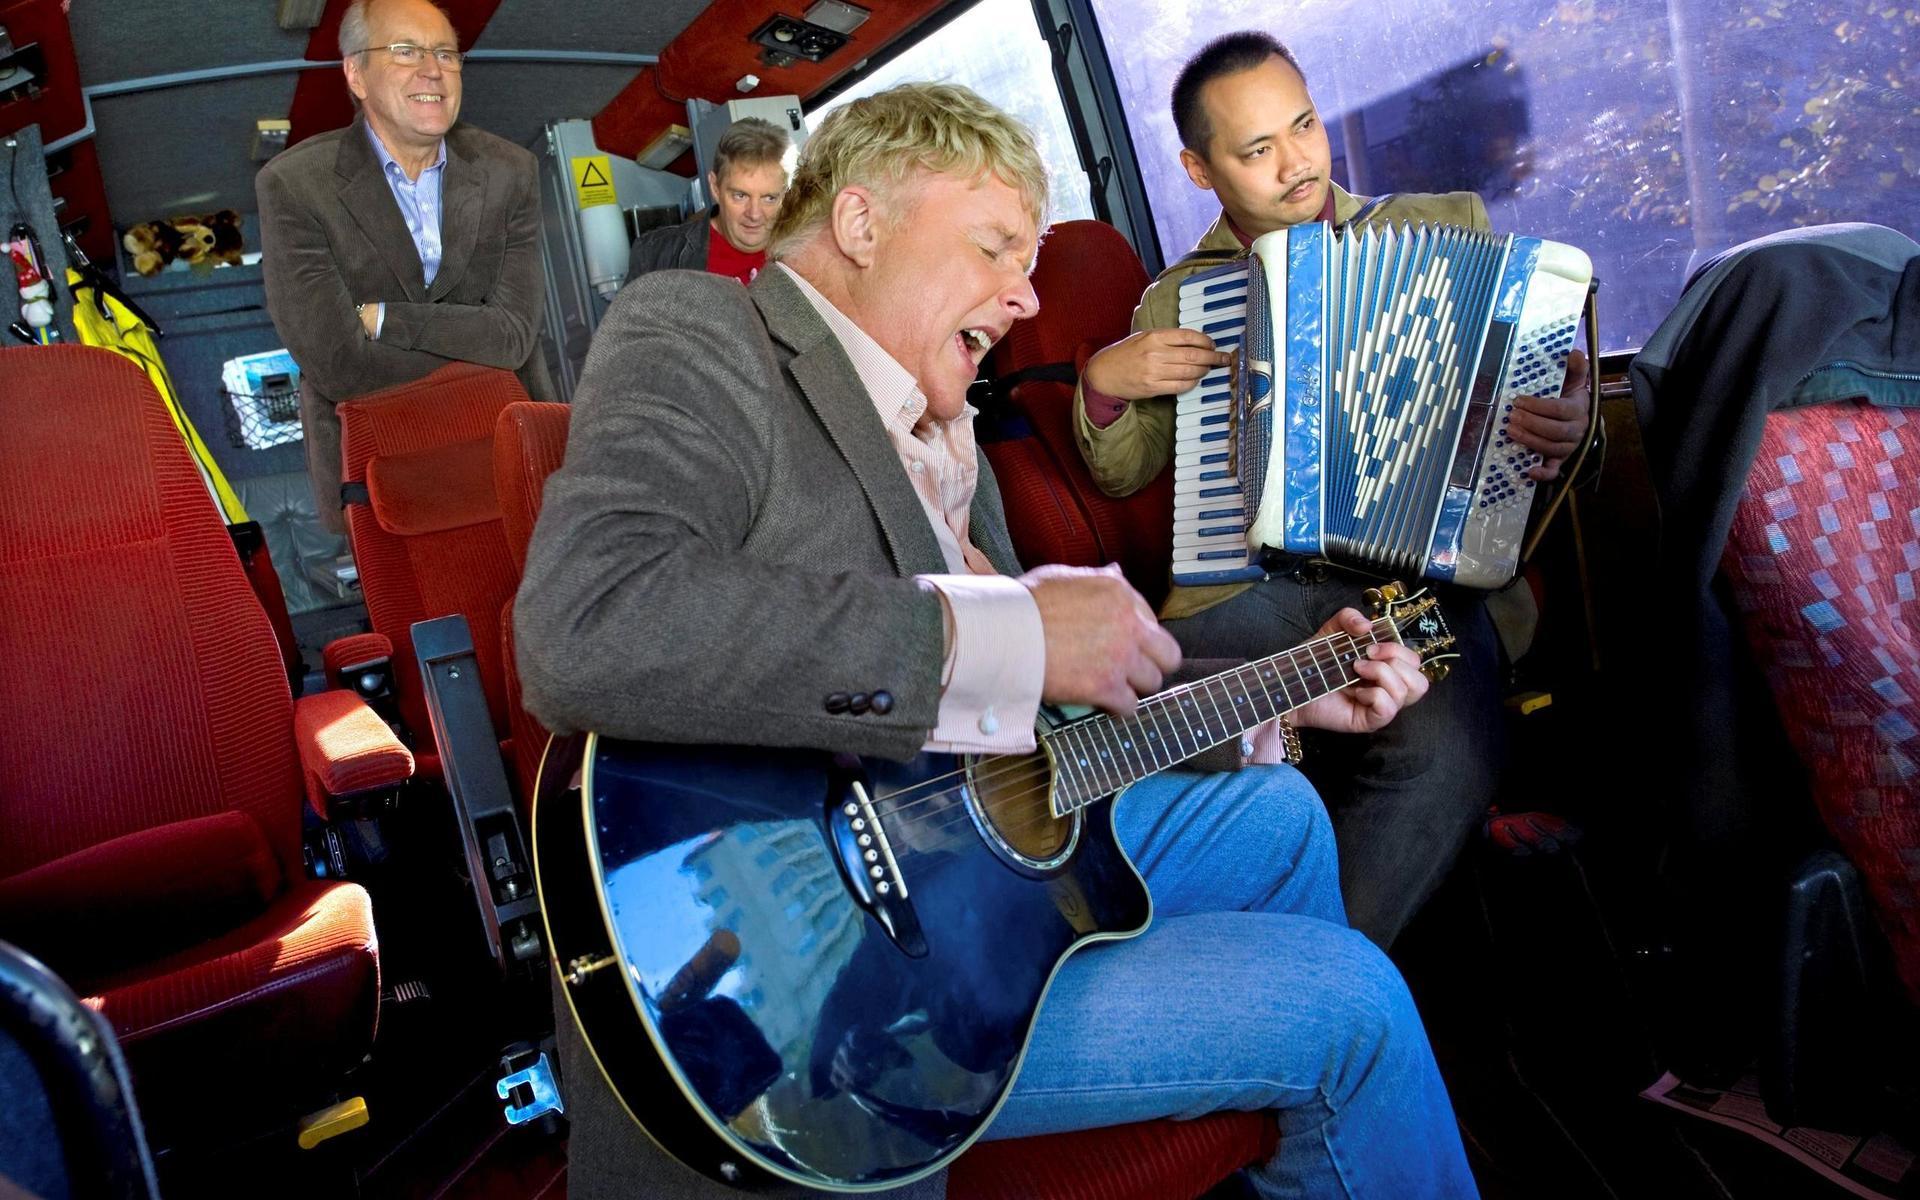 Thorleifs i turnébussen 2008. Thorleif Torstensson med gitarr, Magnus Franzén med dragspel och i bakgrunden Hans-Willie Magnusson och Kim Lindahl.